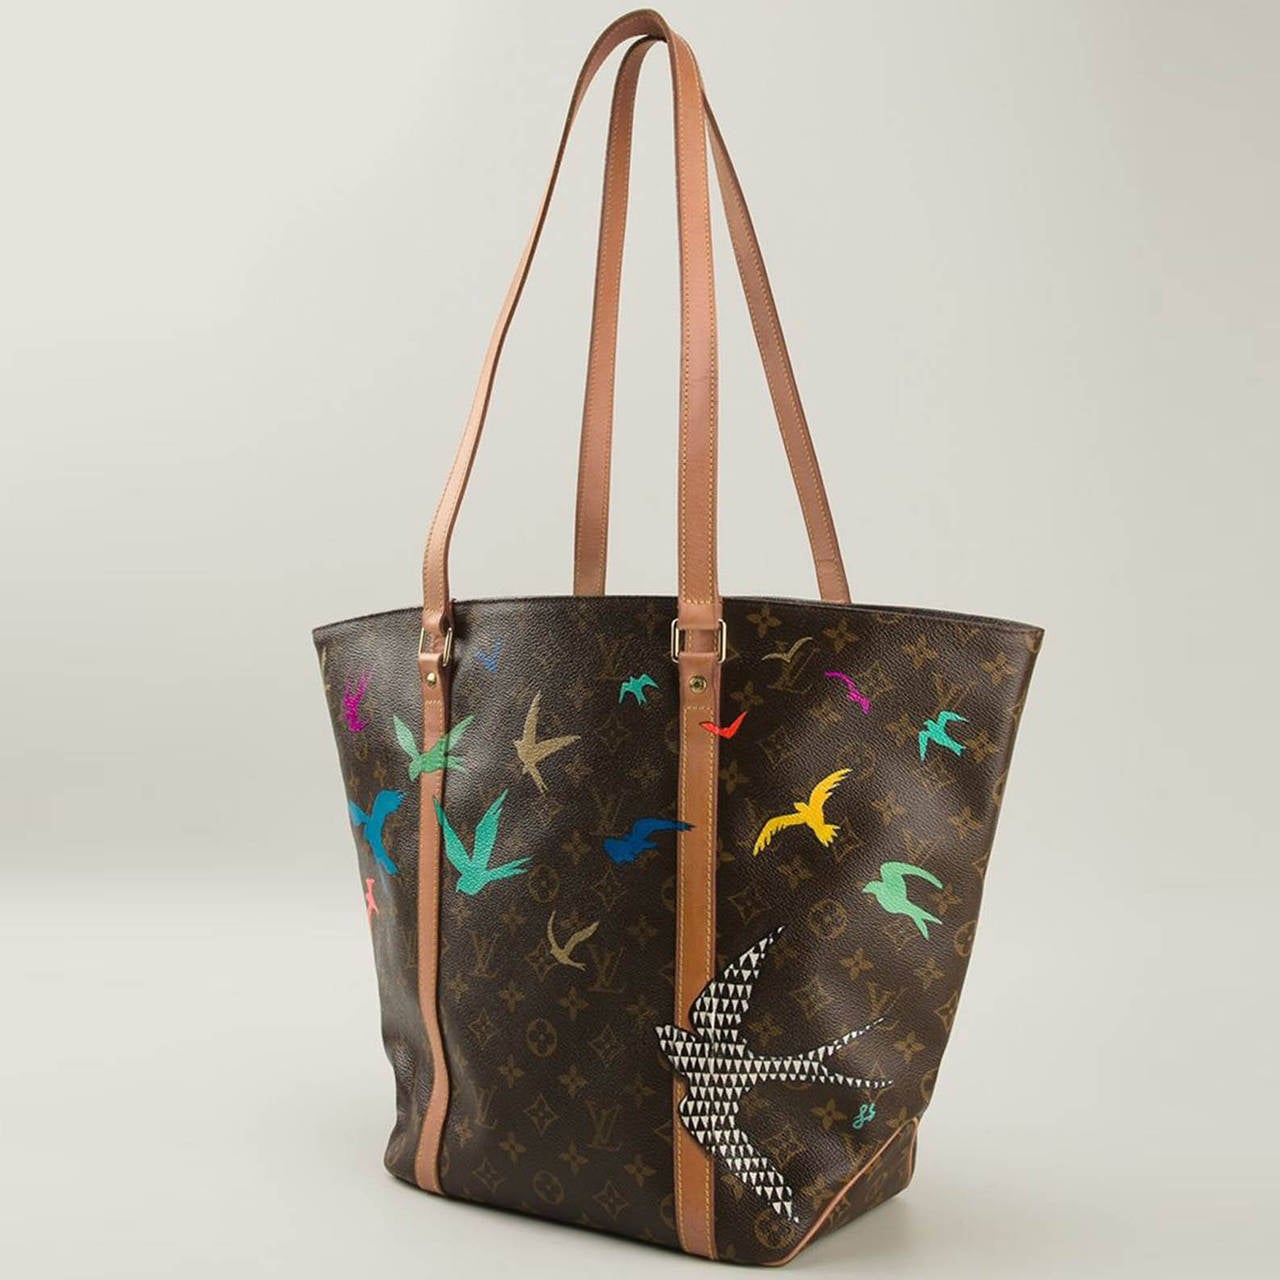 Louis Vuitton Hand Painted Monogram Shopper Bag at 1stdibs